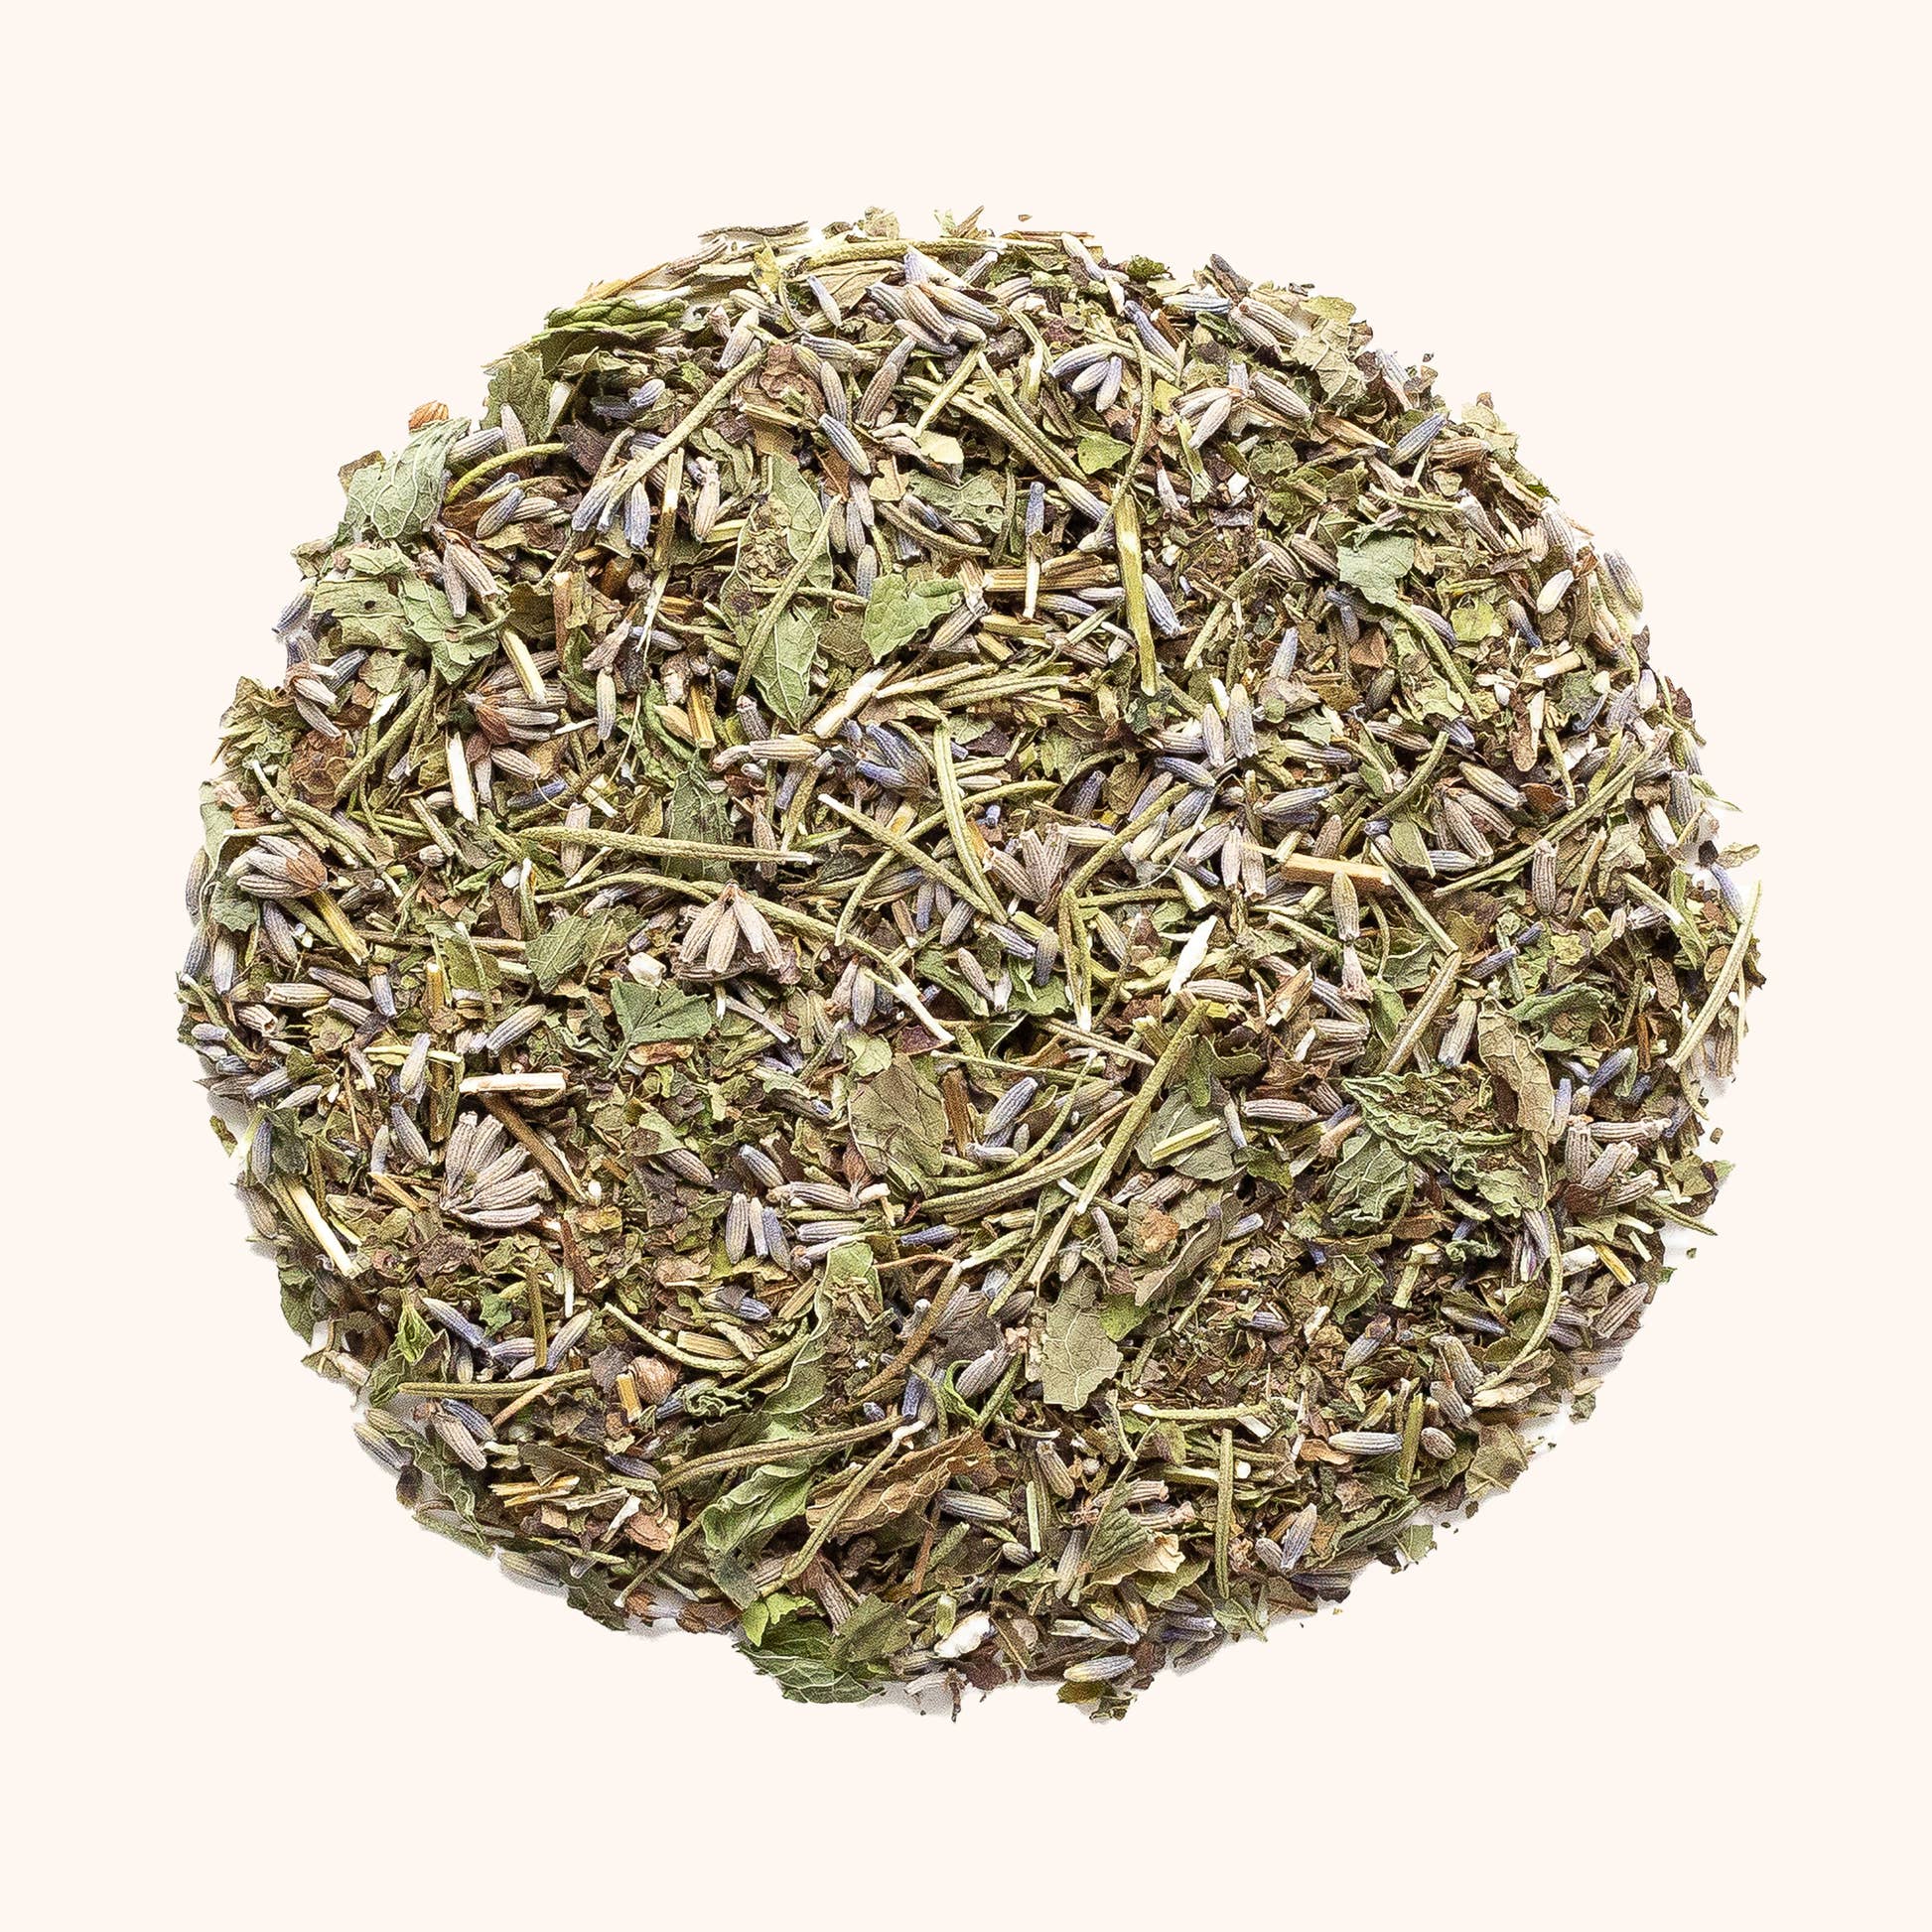 Chinese 5 Spice Powder – Oregon Tea Traders